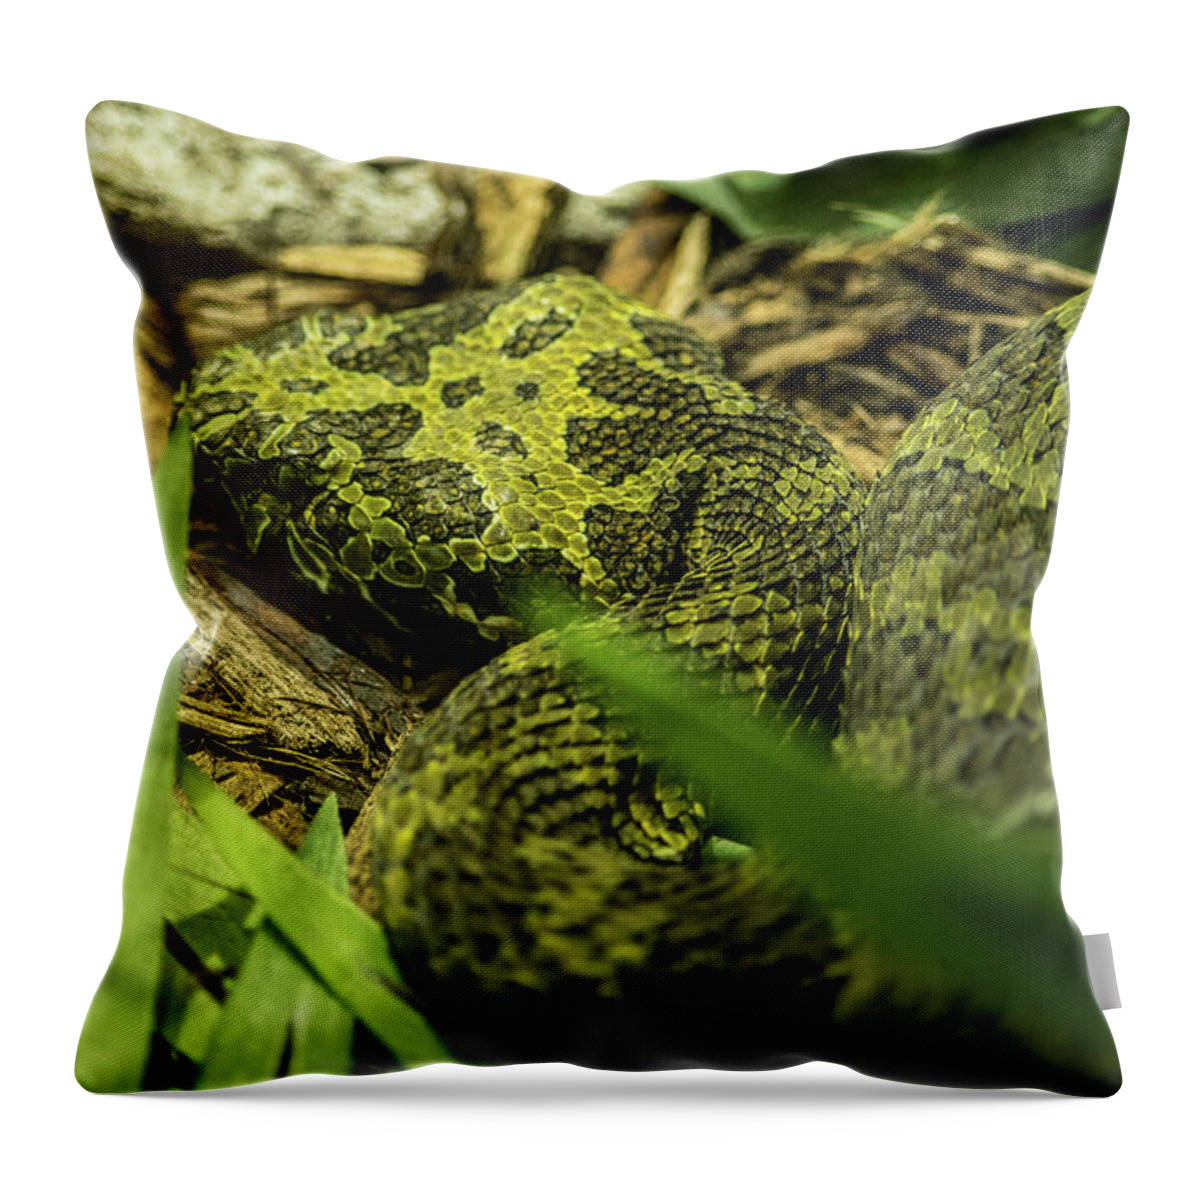 Mangshan Throw Pillow featuring the photograph Mangshan Mountain Viper #1 by Douglas Barnett